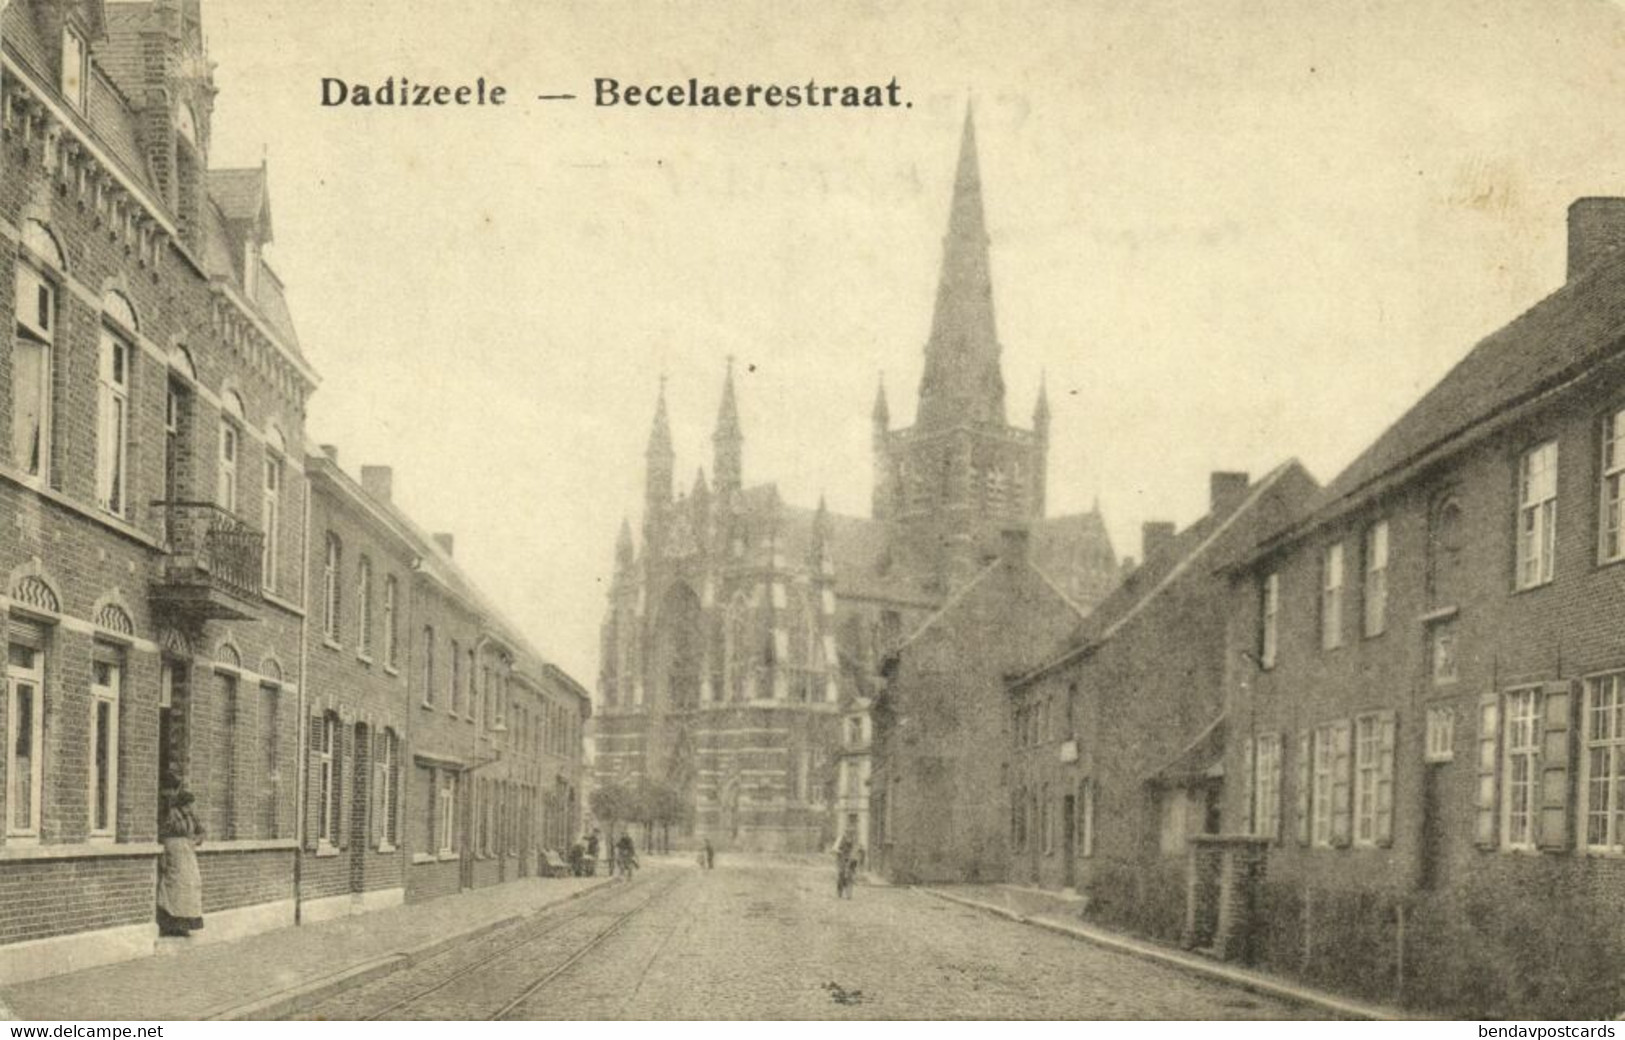 Belgium, DADIZELE DADIZEELE, Becelaerestraat (1910s) Postcard - Moorslede